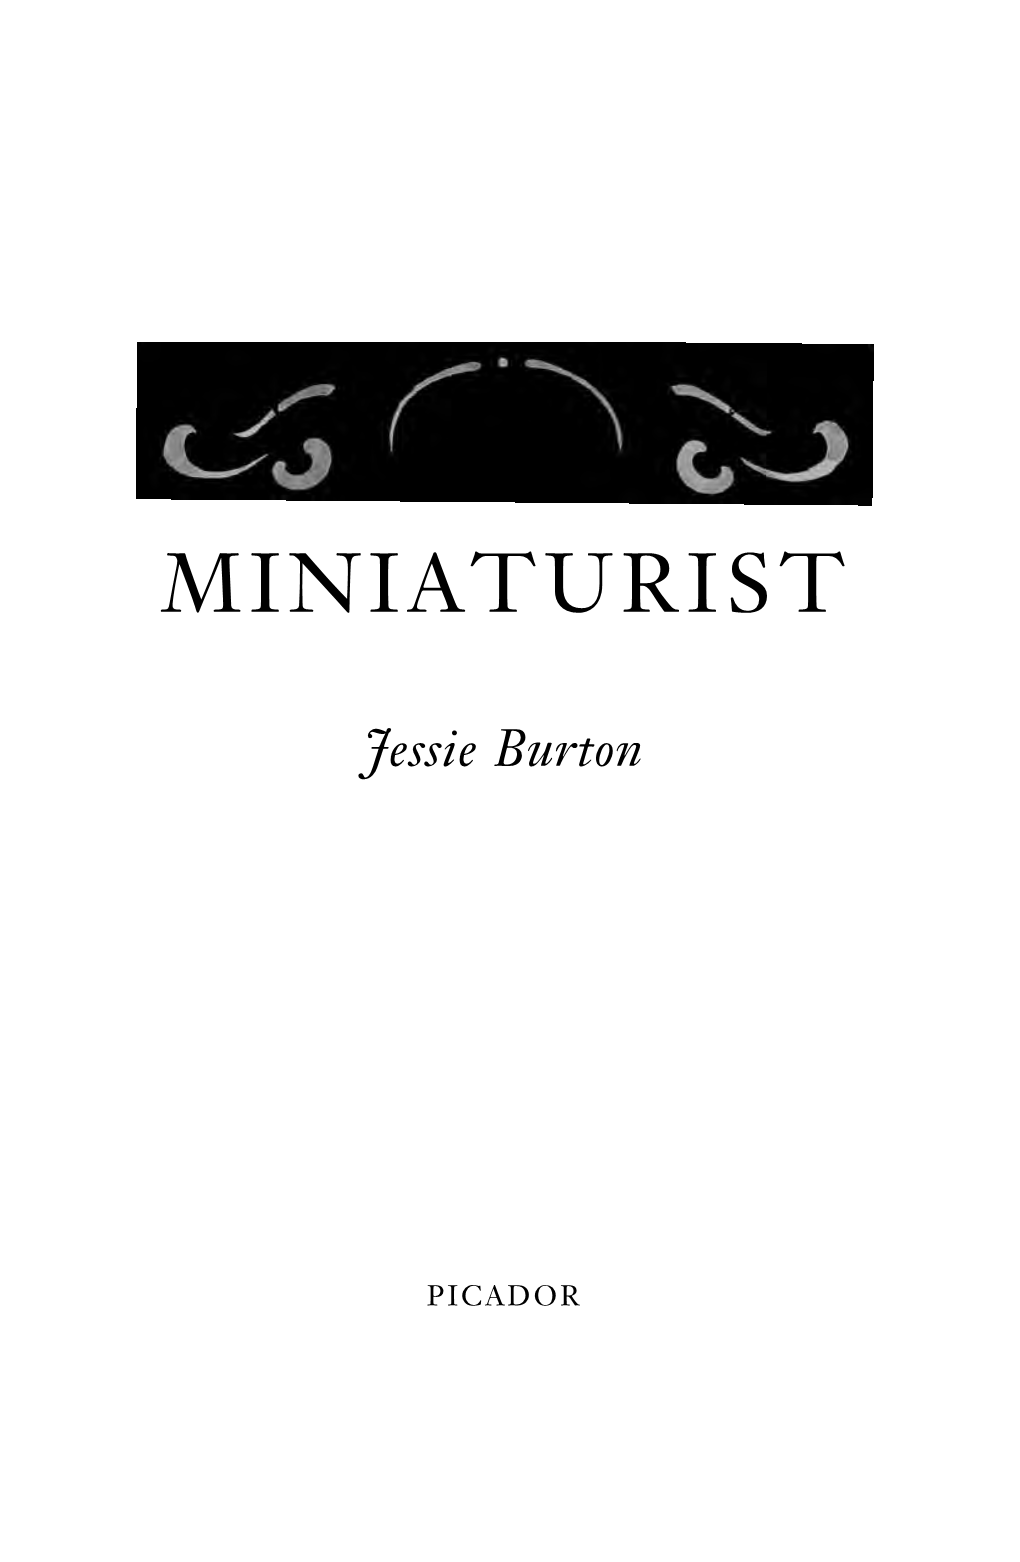 Miniaturist I-Xii 001-436 V4:Jessie Burton 16/05/2014 18:33 Page Hbd.Iii